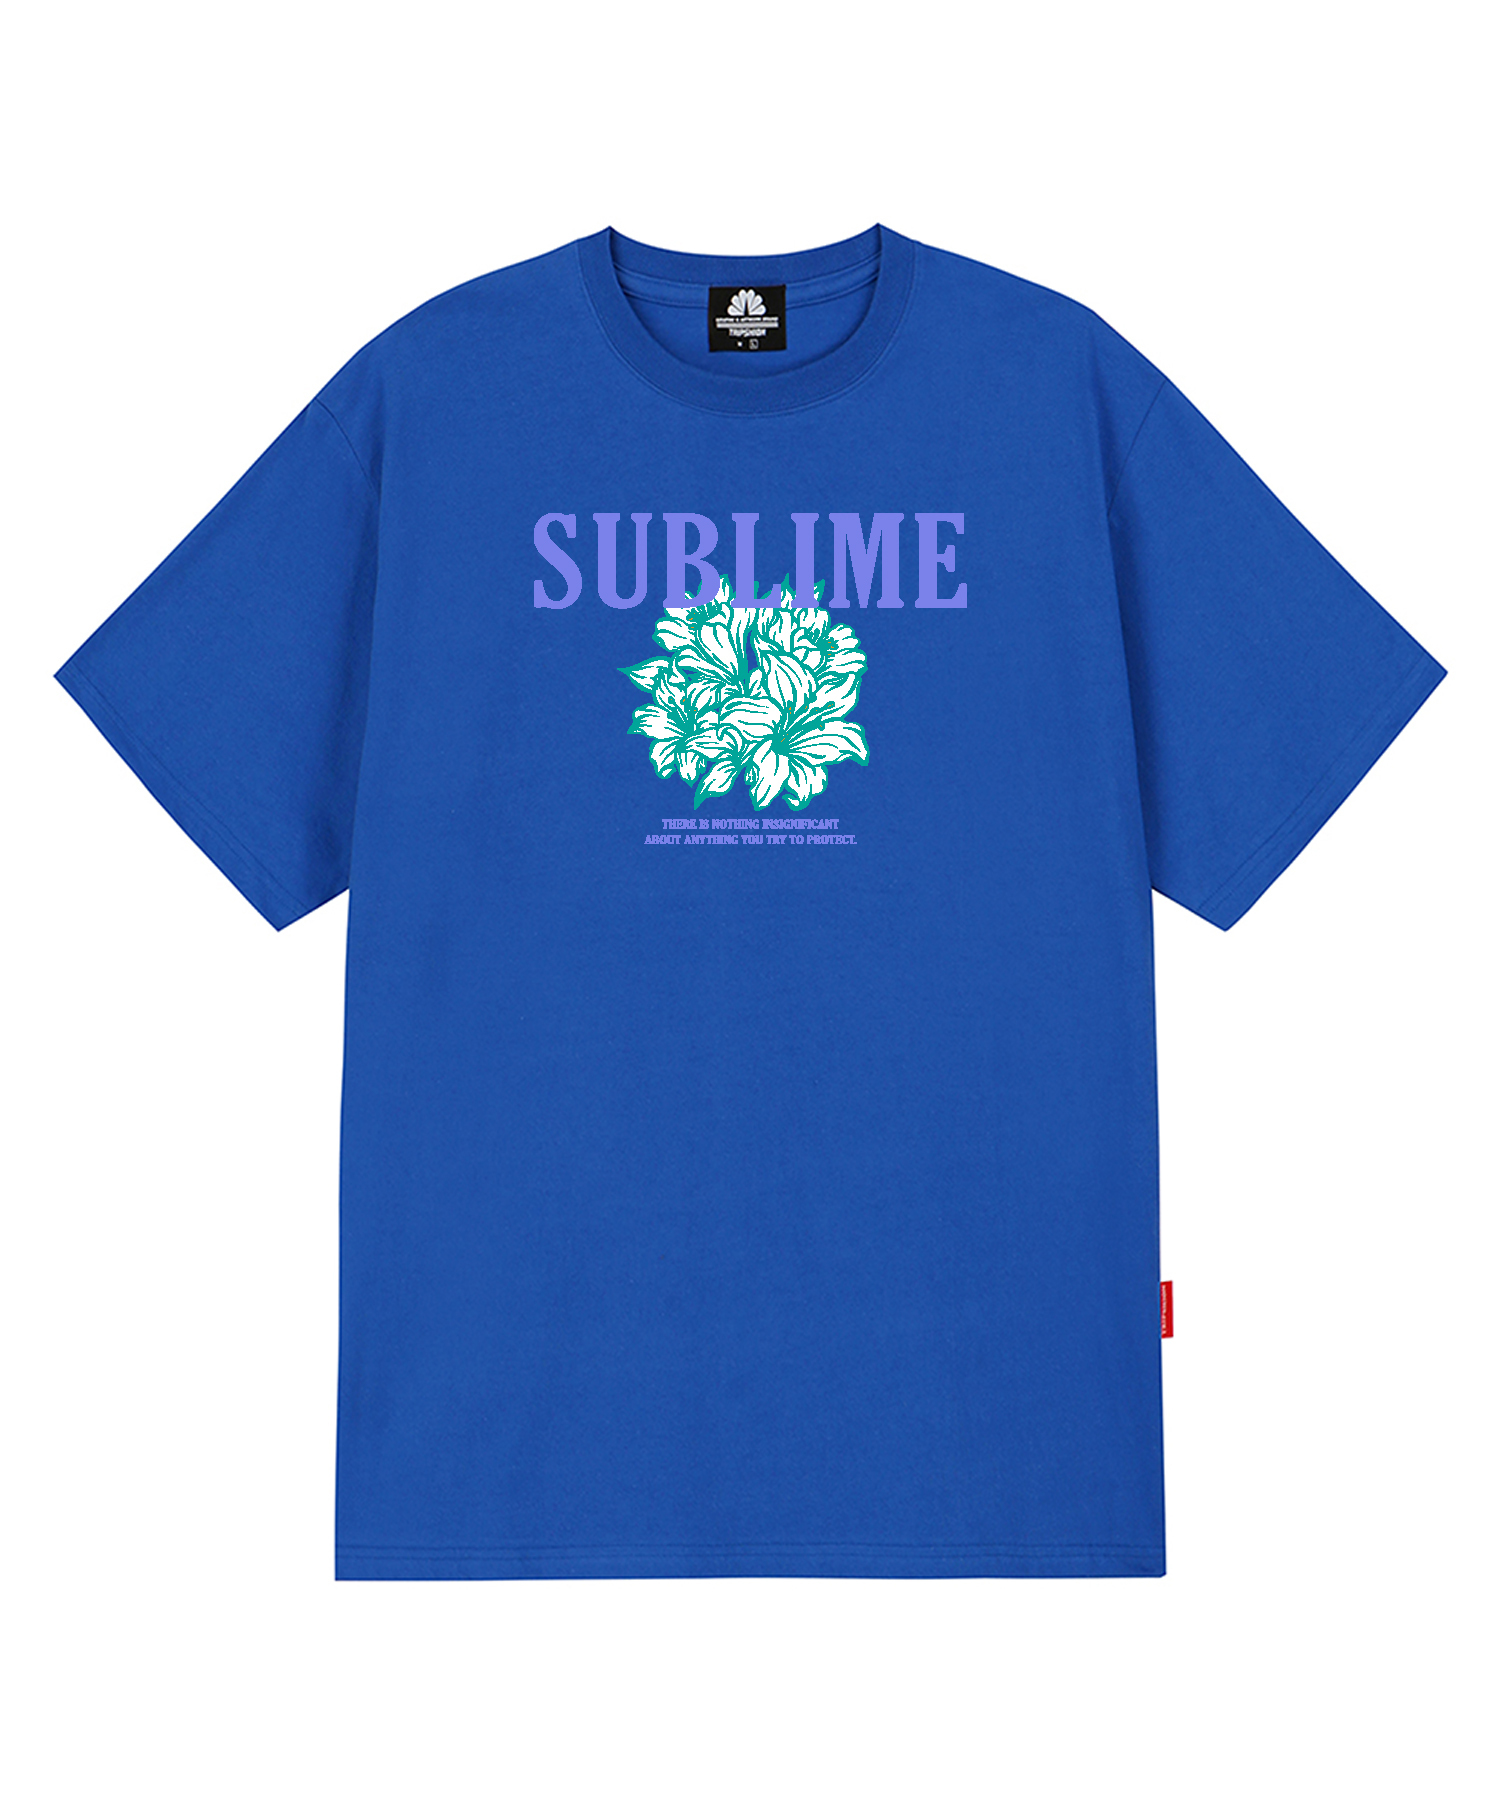 SURLIME FLOWER GRAPHIC T-SHIRTS - BLUE